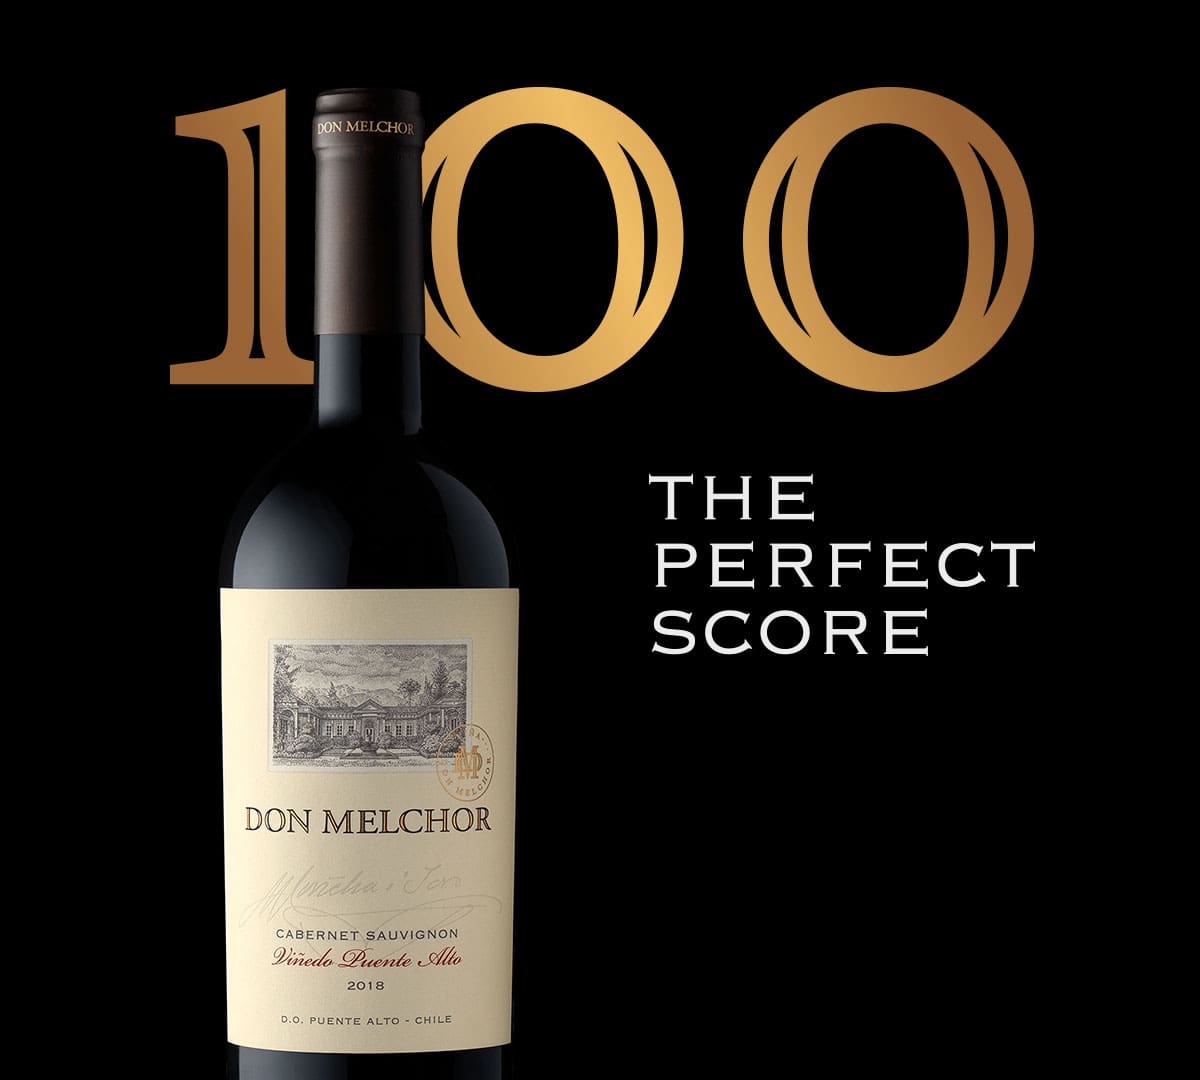 Don Melchor obtains 100 points, the perfect score